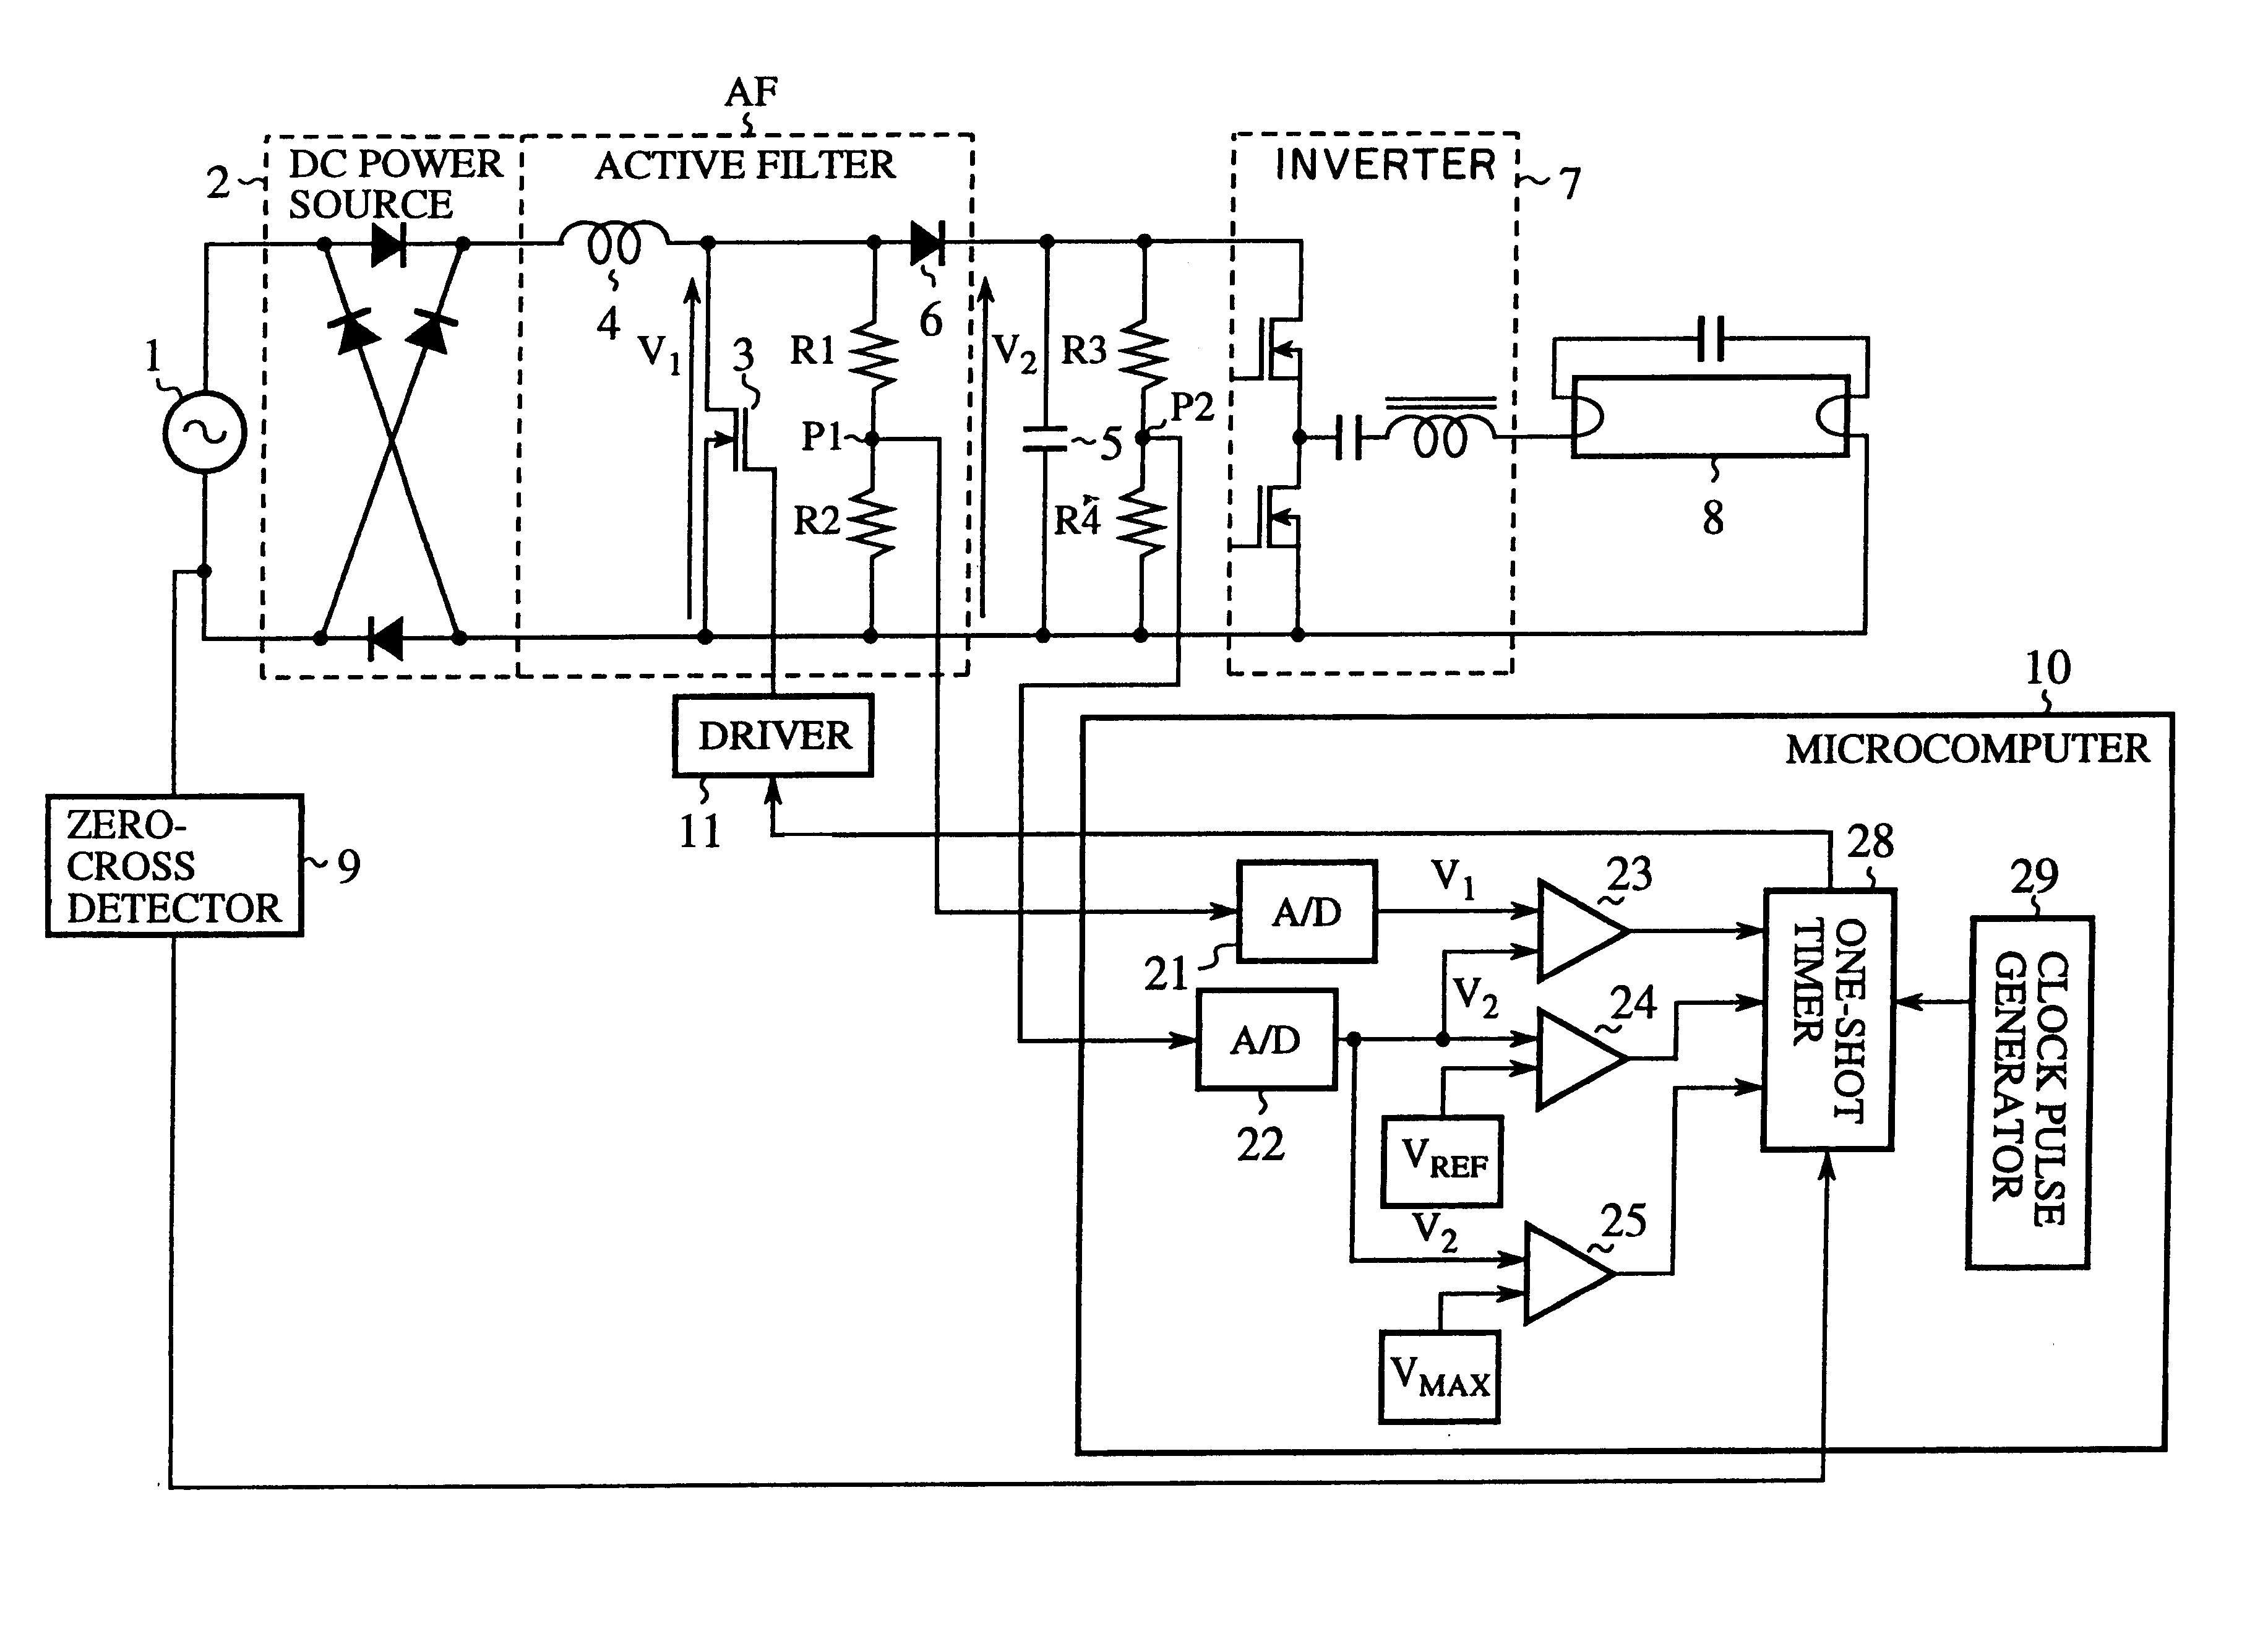 Power regulator using active filter